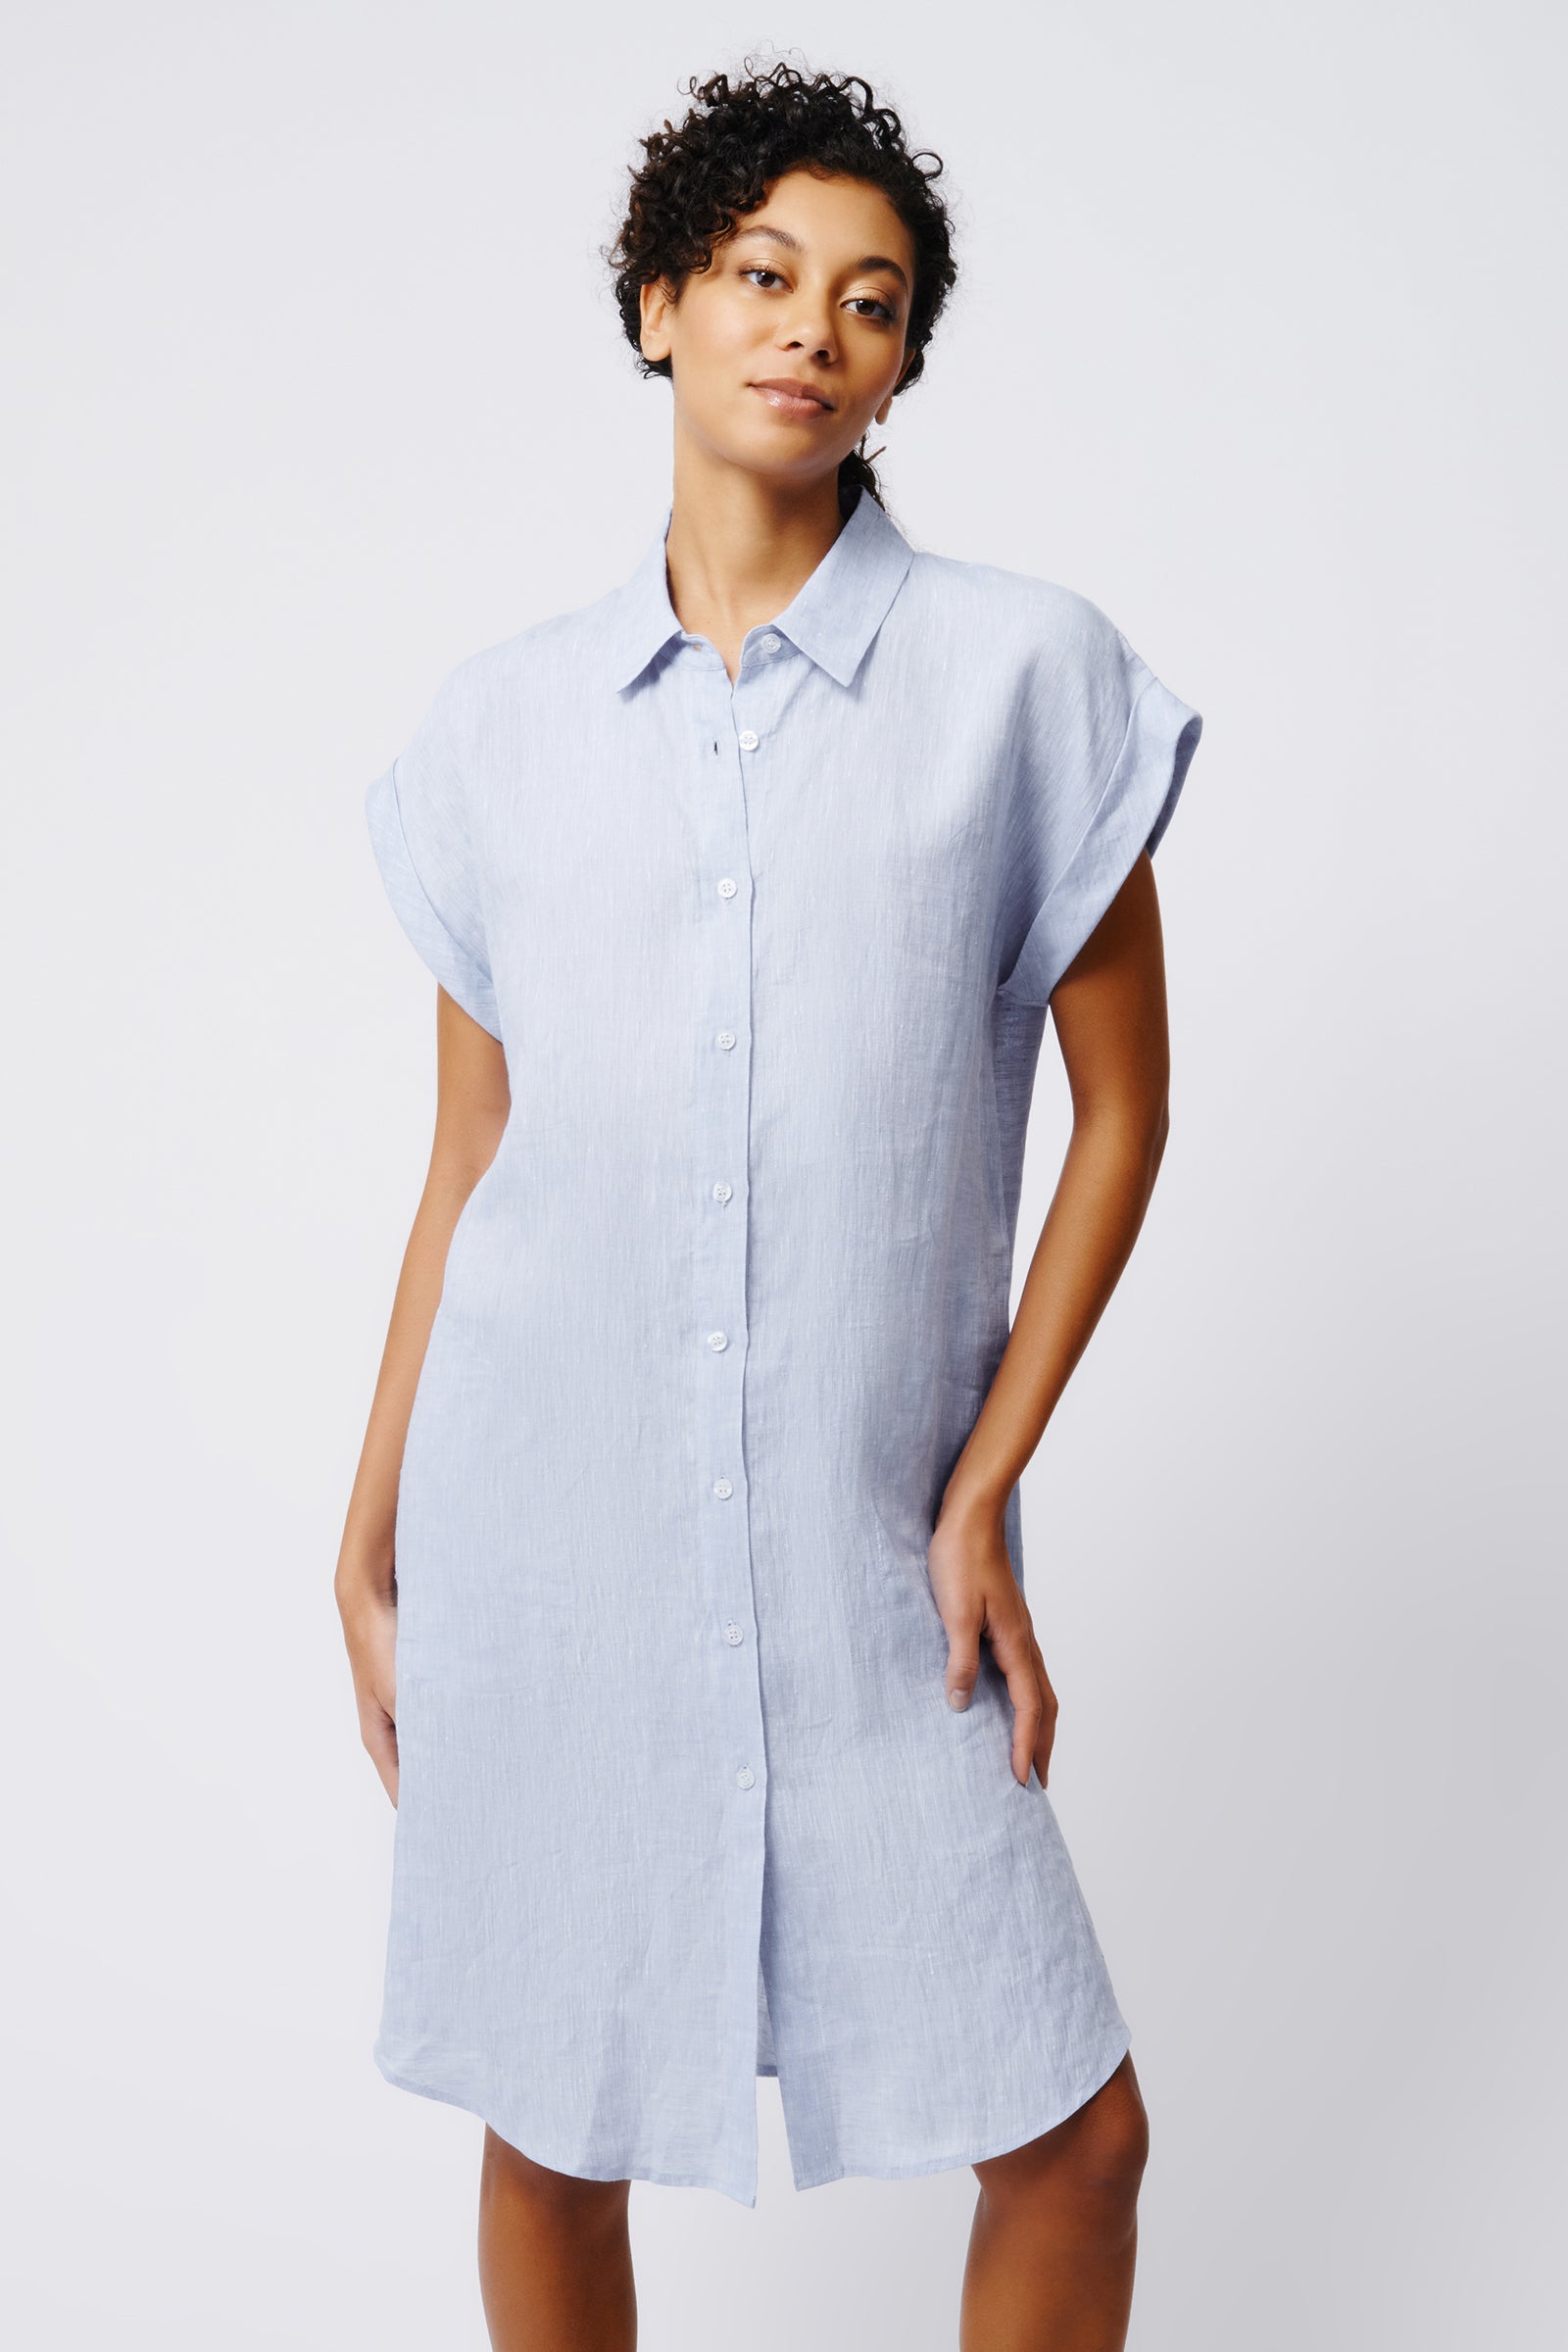 Kal Rieman Hedy Cuffed Cap Sleeve Shirt Dress in Blue Linen on Model Front View Crop 5